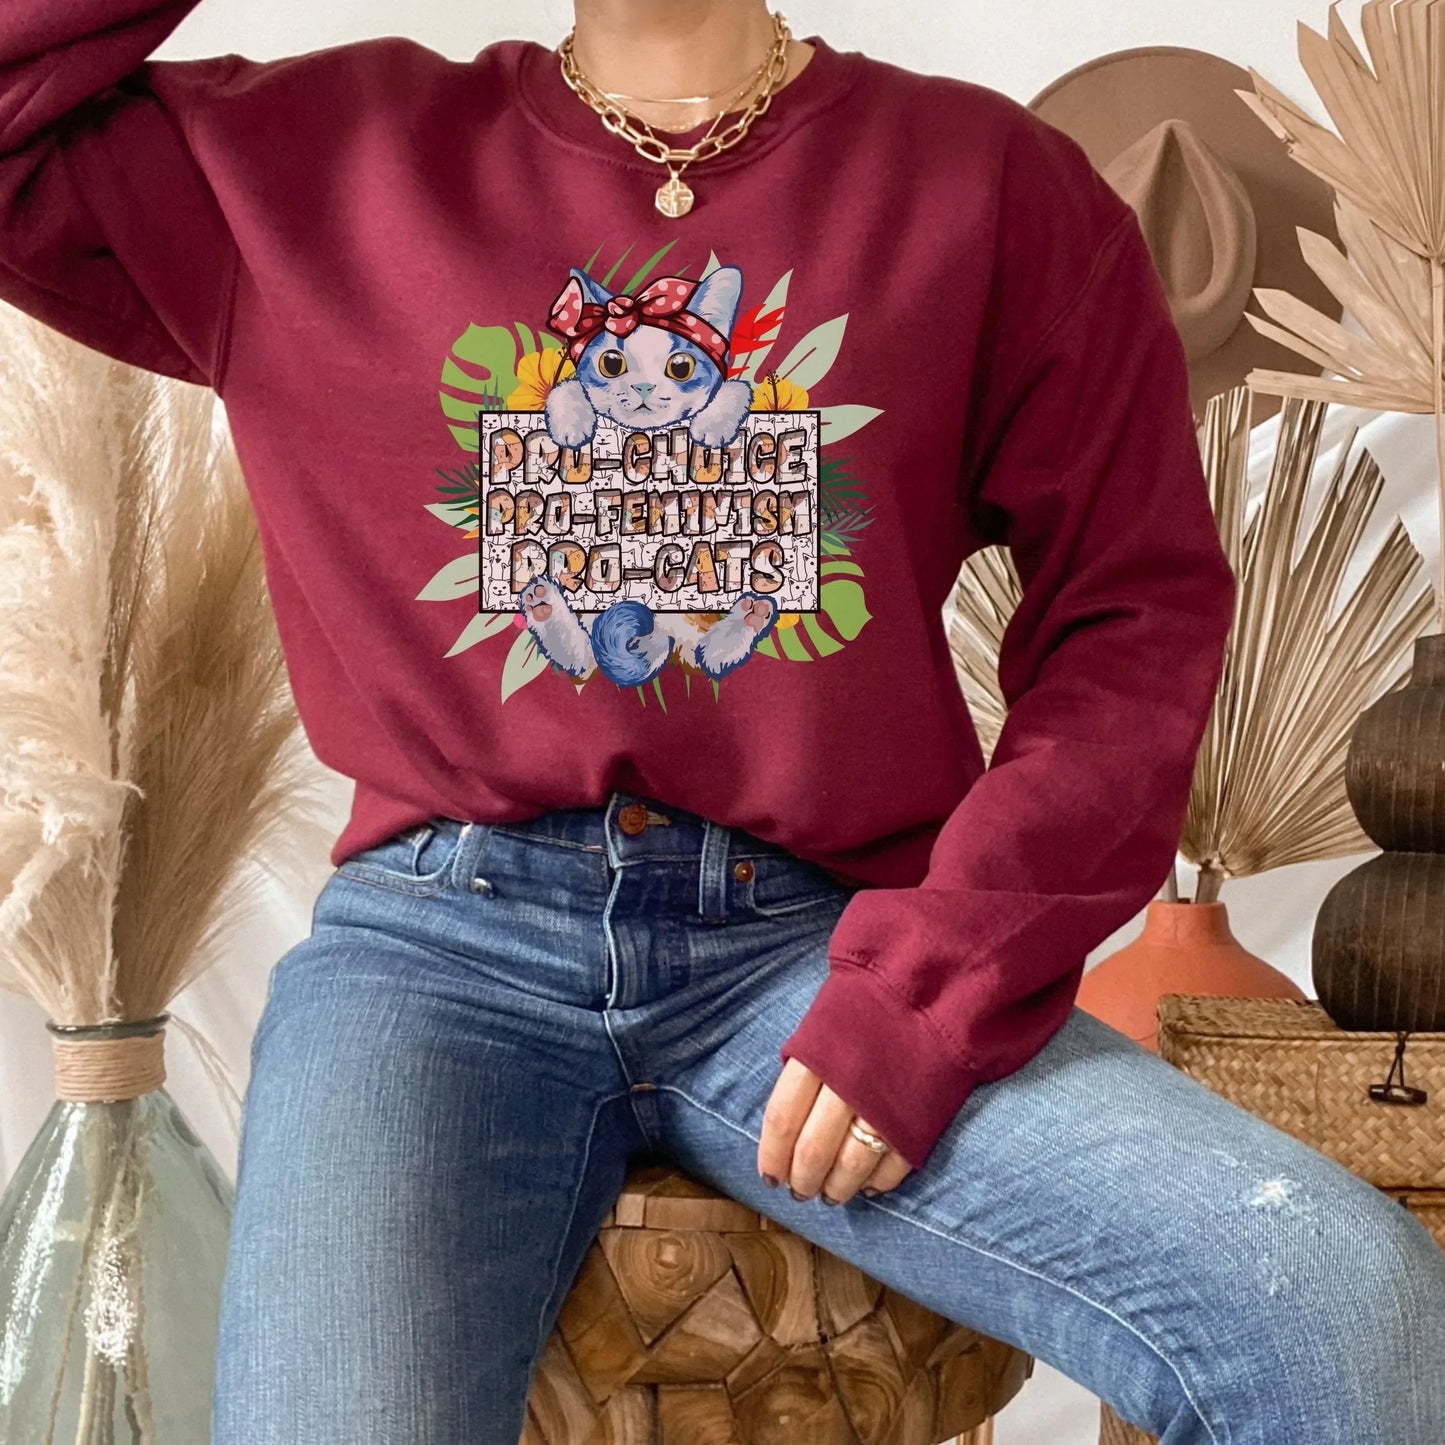 Cat Sweater, Cat Mom Sweatshirt, Cat Clothes, Pro Choice Hoodie, Pro Feminism Shirt, Cat Love, Funny Cat Themed gifts Cute Kawaii Cat Tshirt